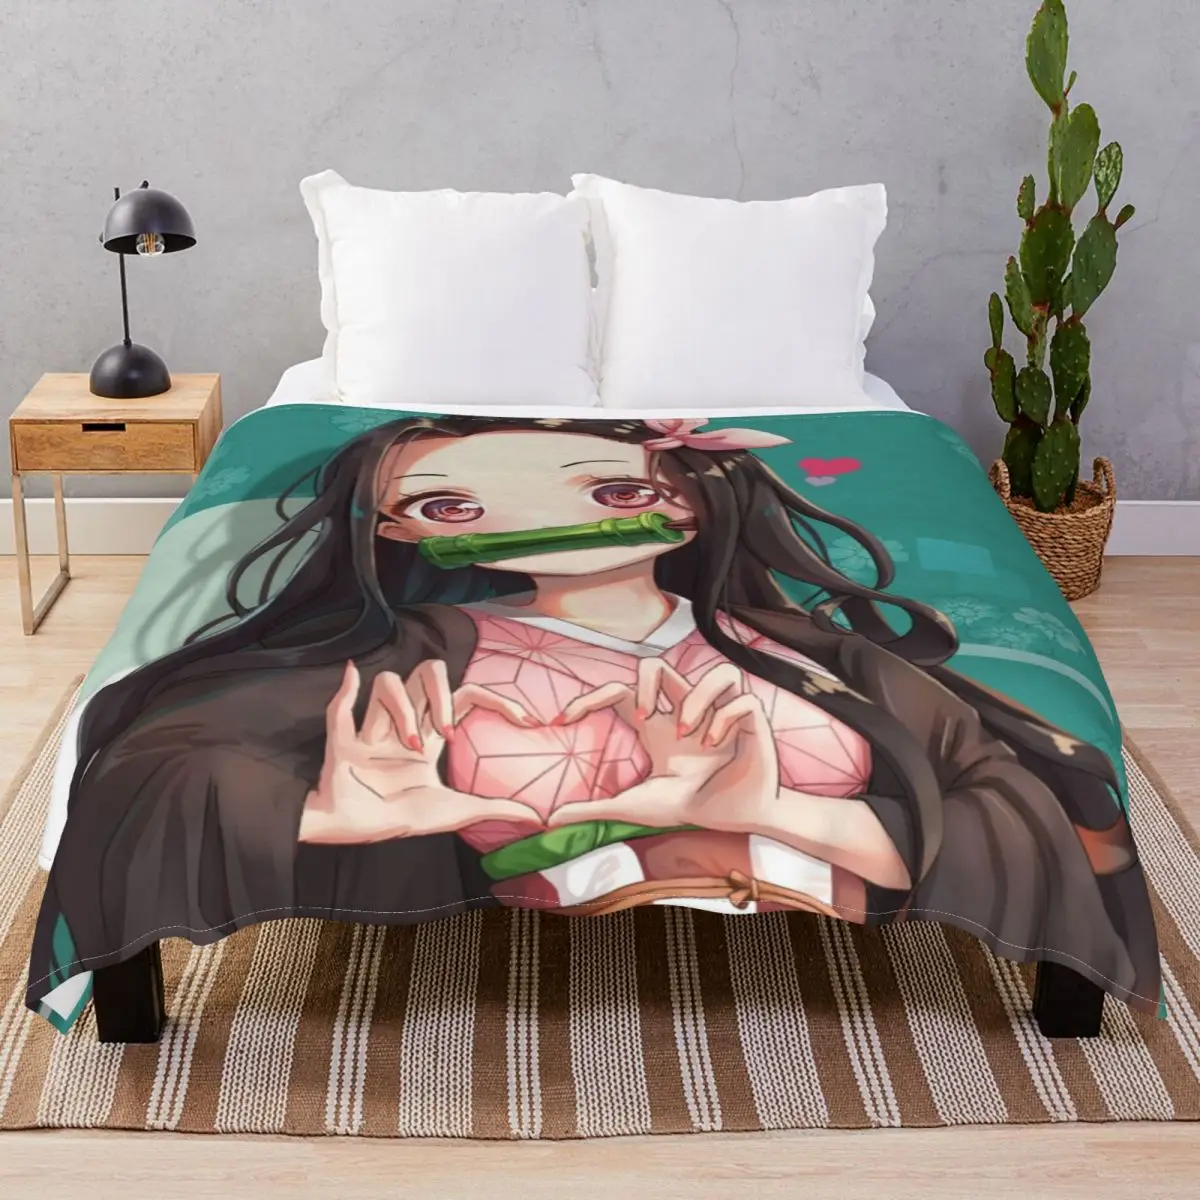 Demon Slayer Kimetsu No Yaiba Blanket Flannel Winter Warm Throw Blankets for Bed Home Couch Camp Cinema